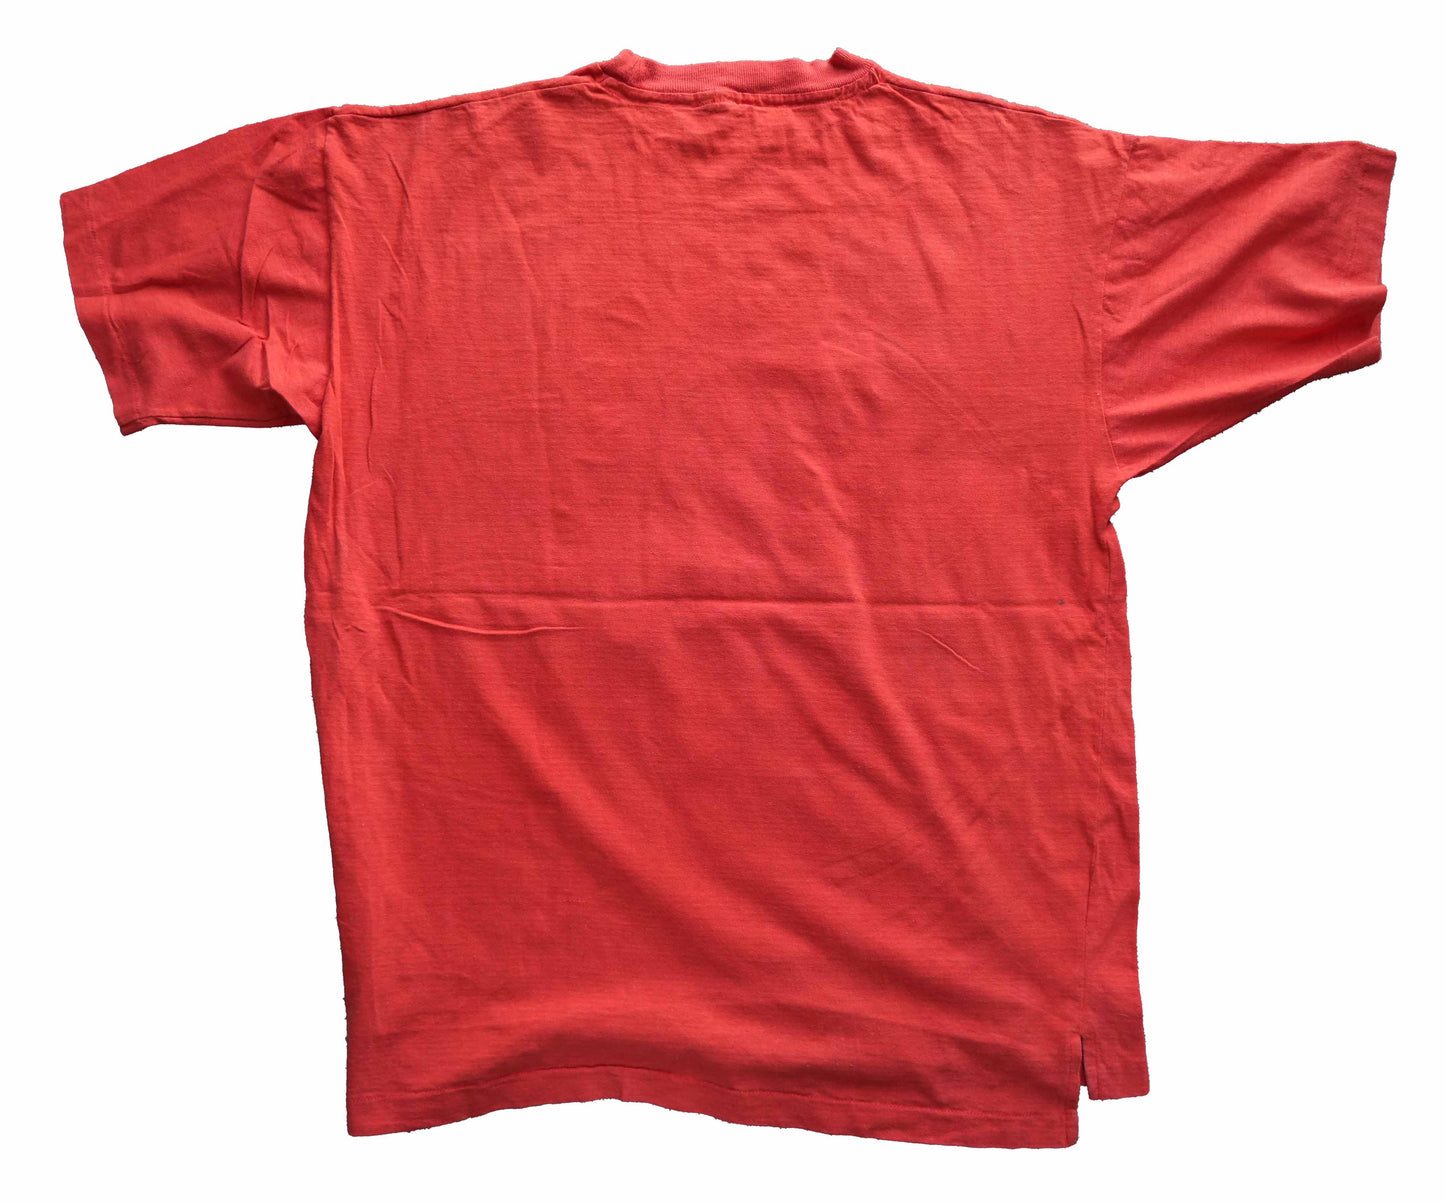 '90 T-shirt　size M